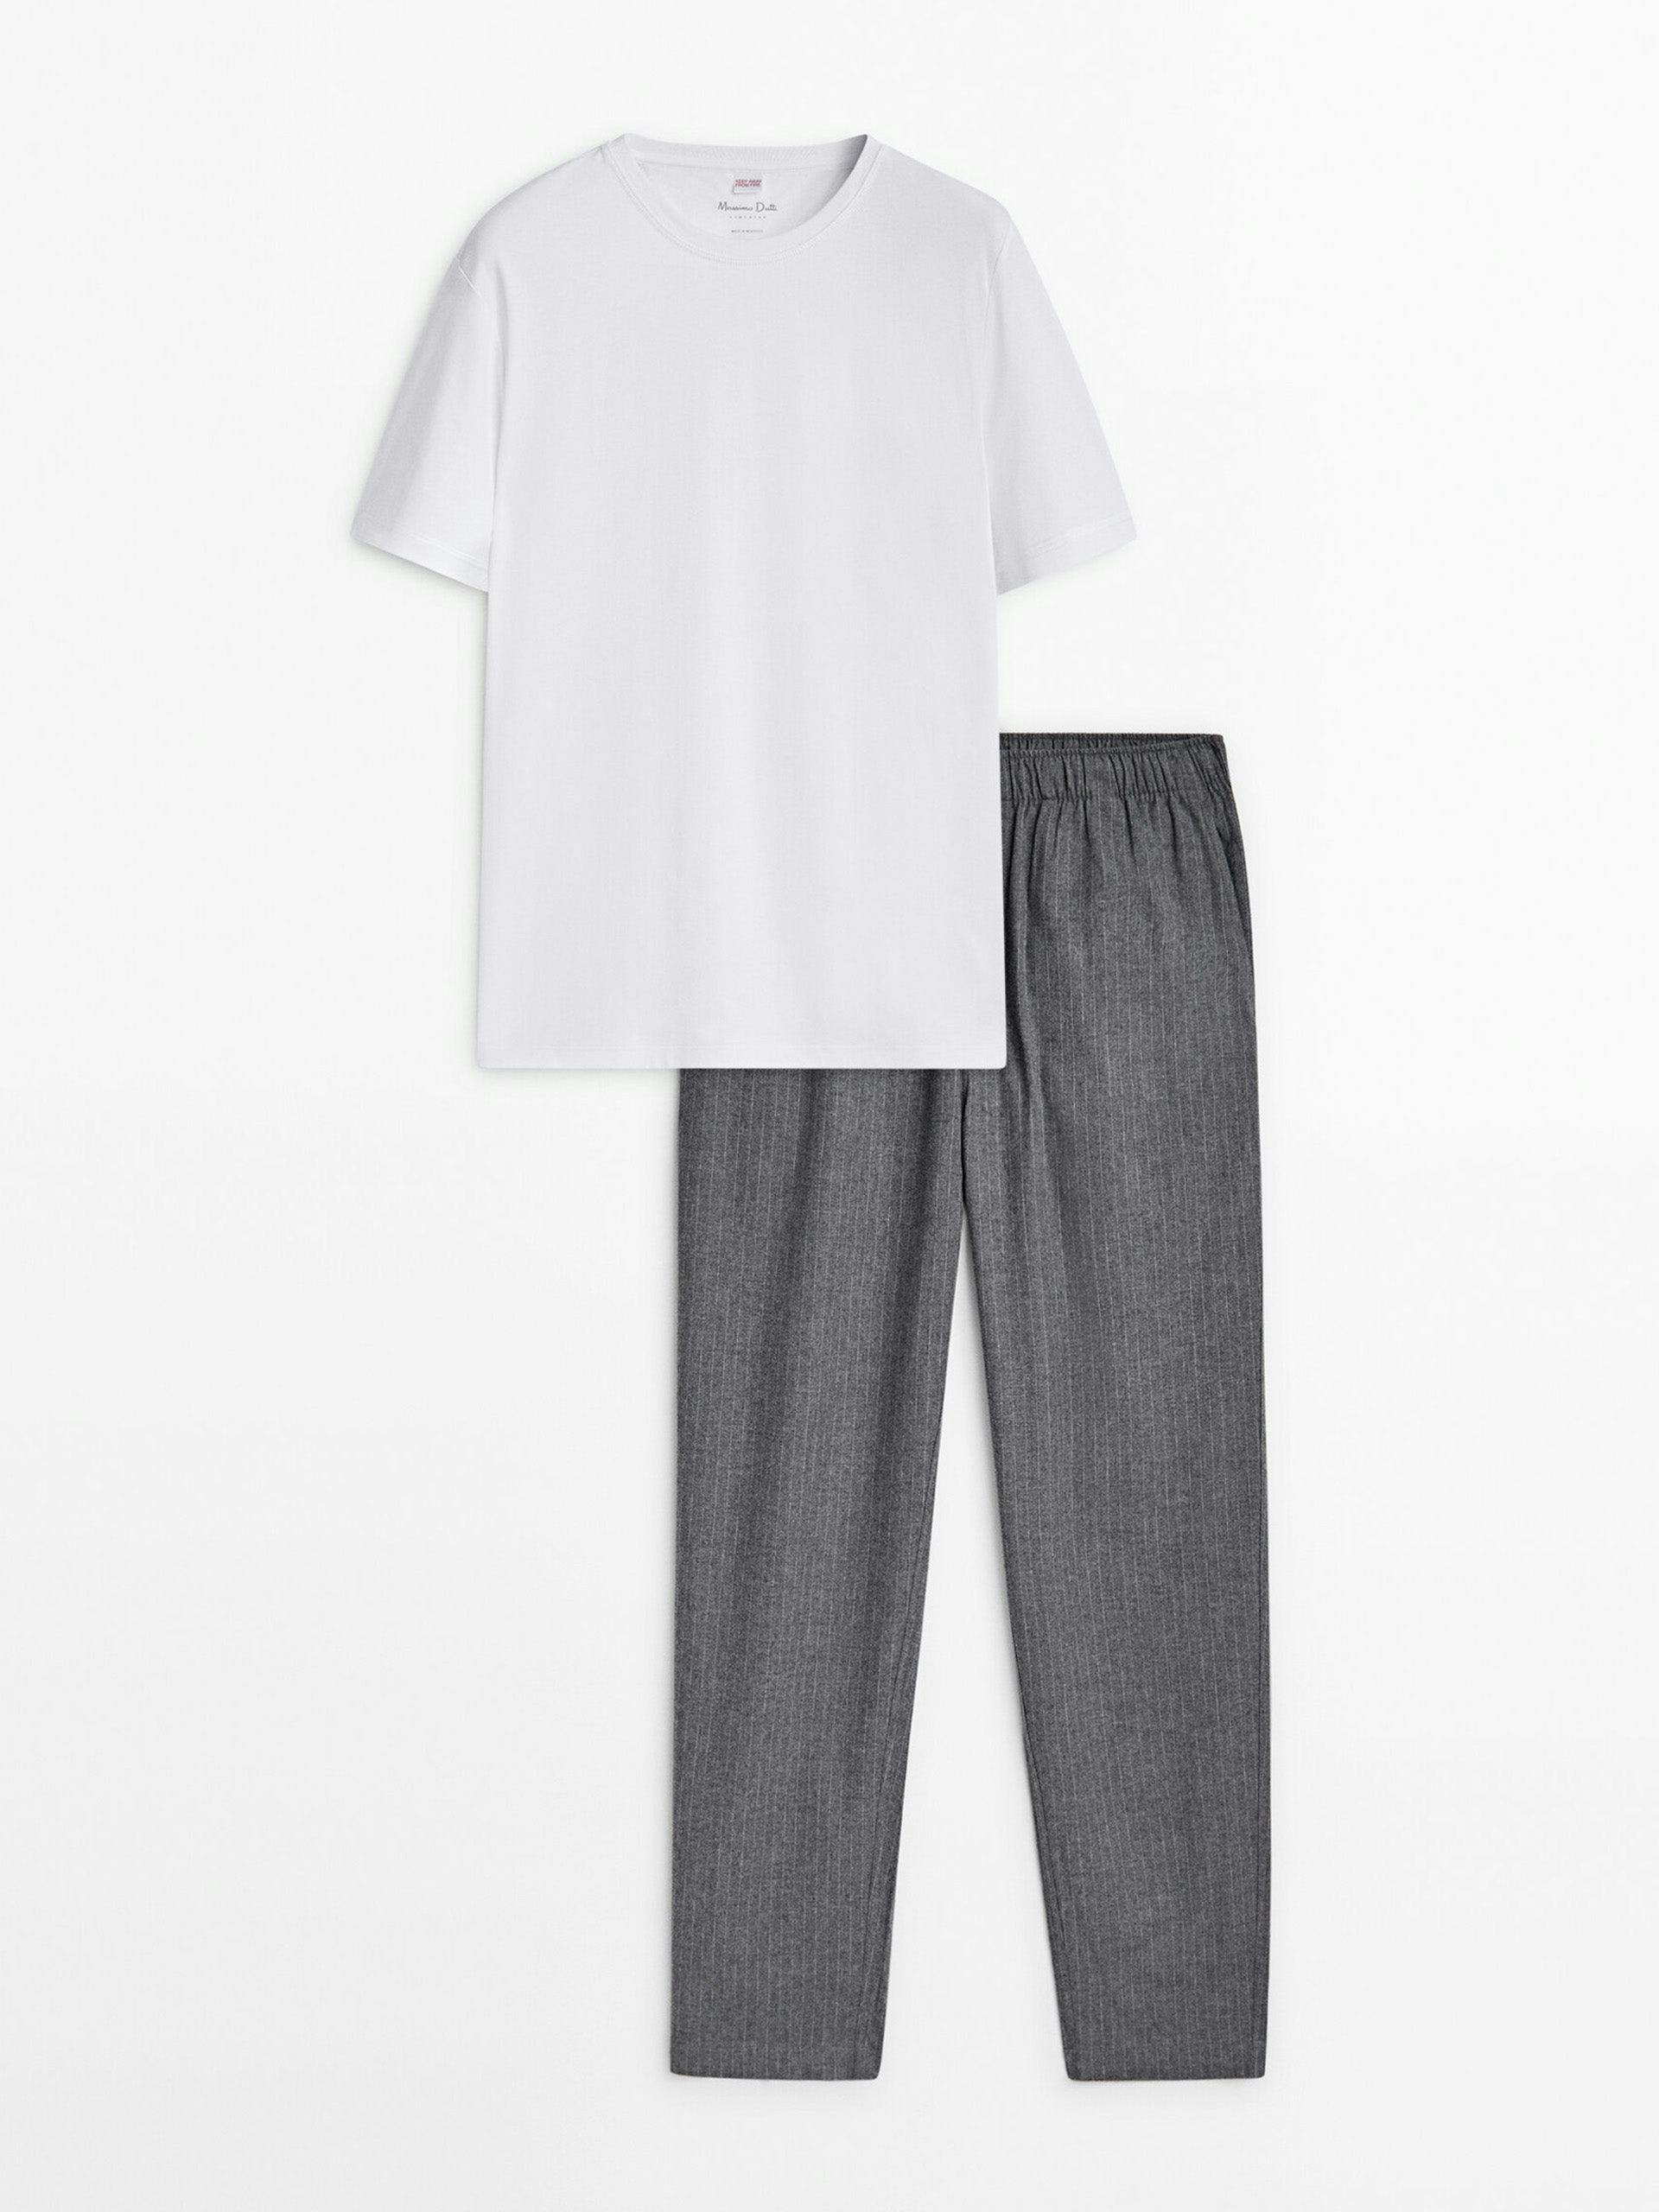 Striped pyjama bottoms and short sleeve t-shirt